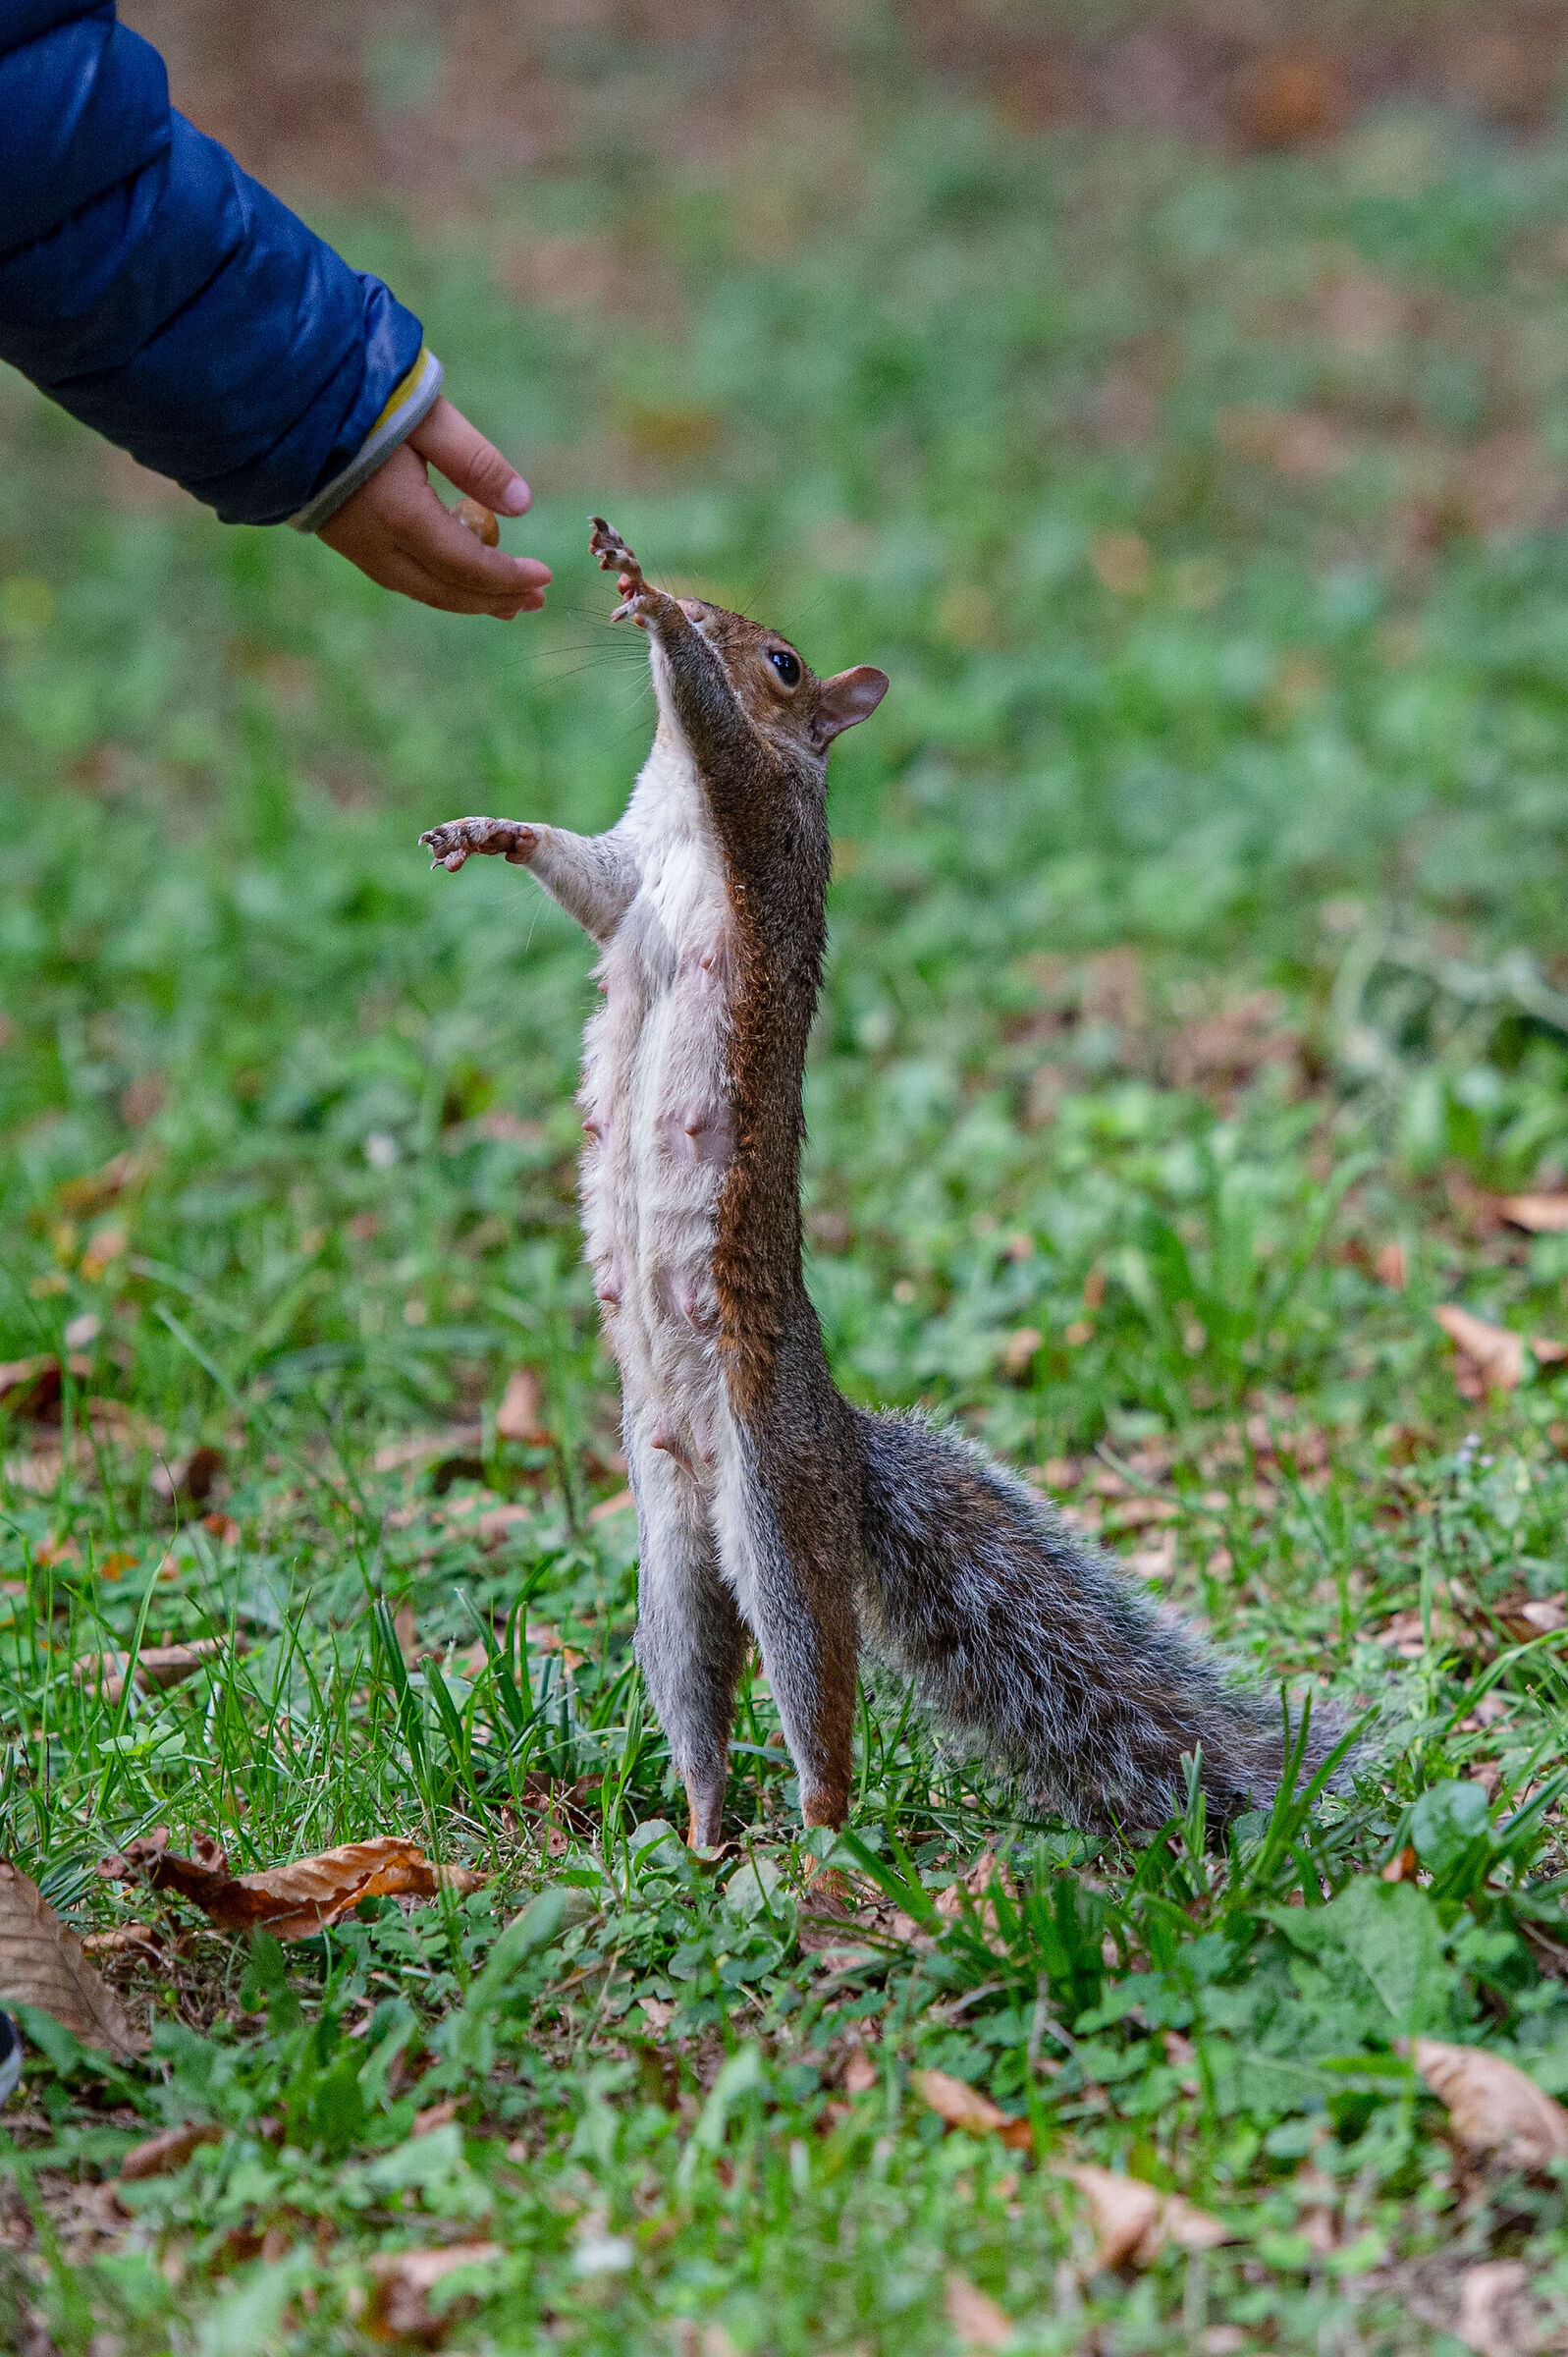 Squirrel at monza park...